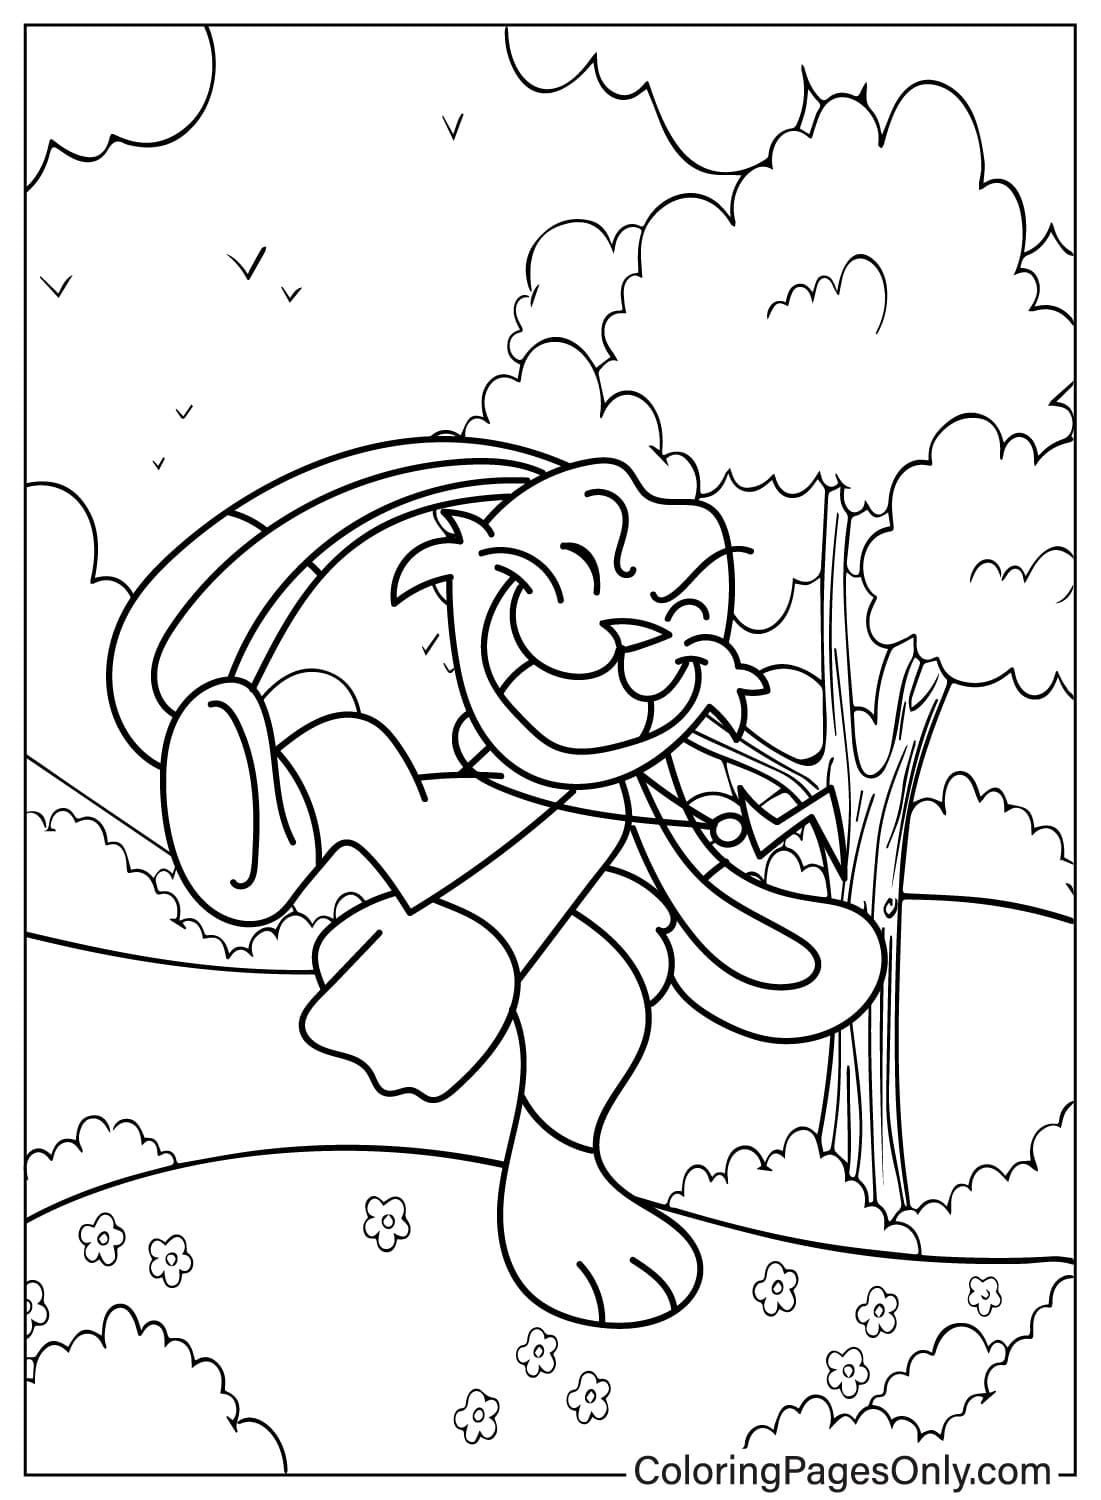 Images Hoppy Hopscotch Coloring Page from Hoppy Hopscotch